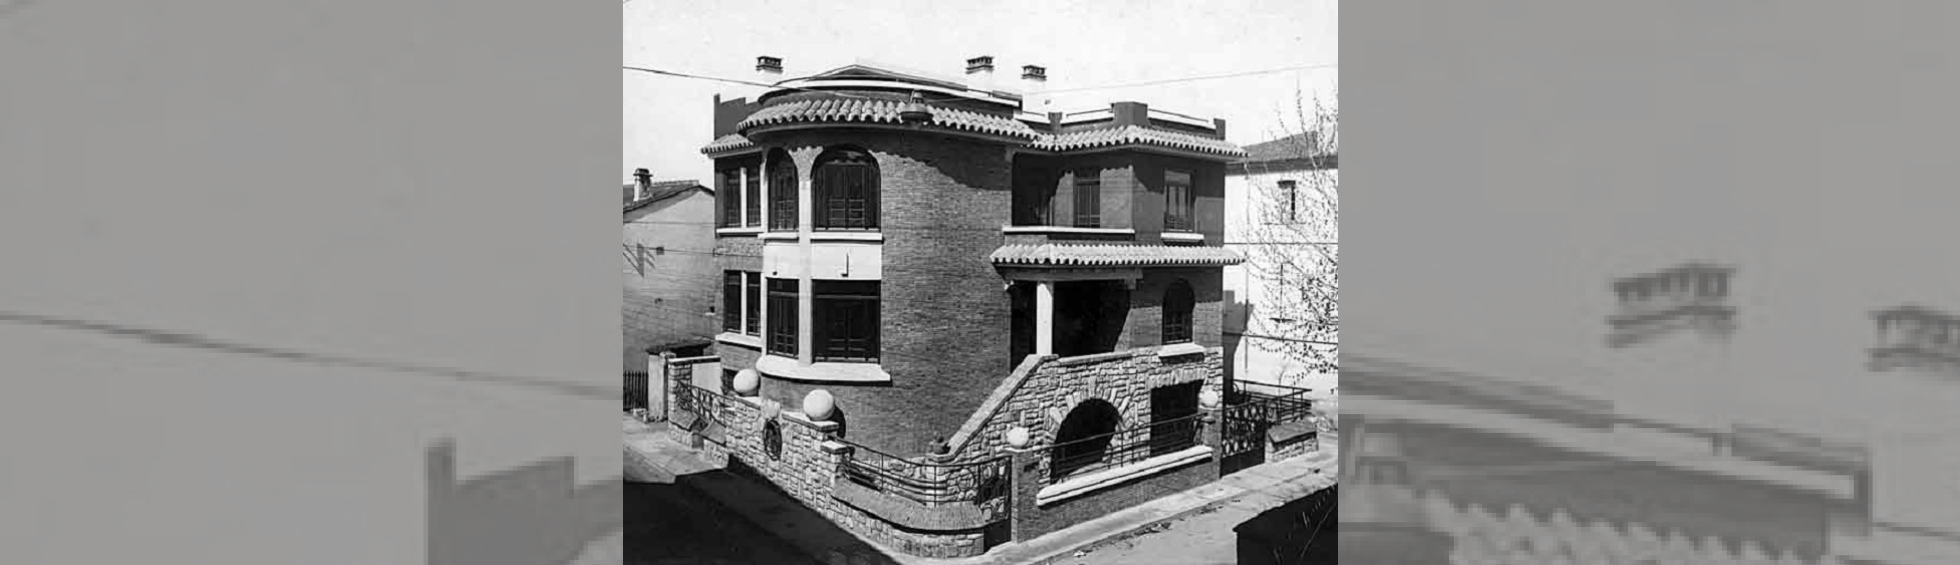 Maison Maury de Férid Muchir, 1934, 1 rue Condorcet.